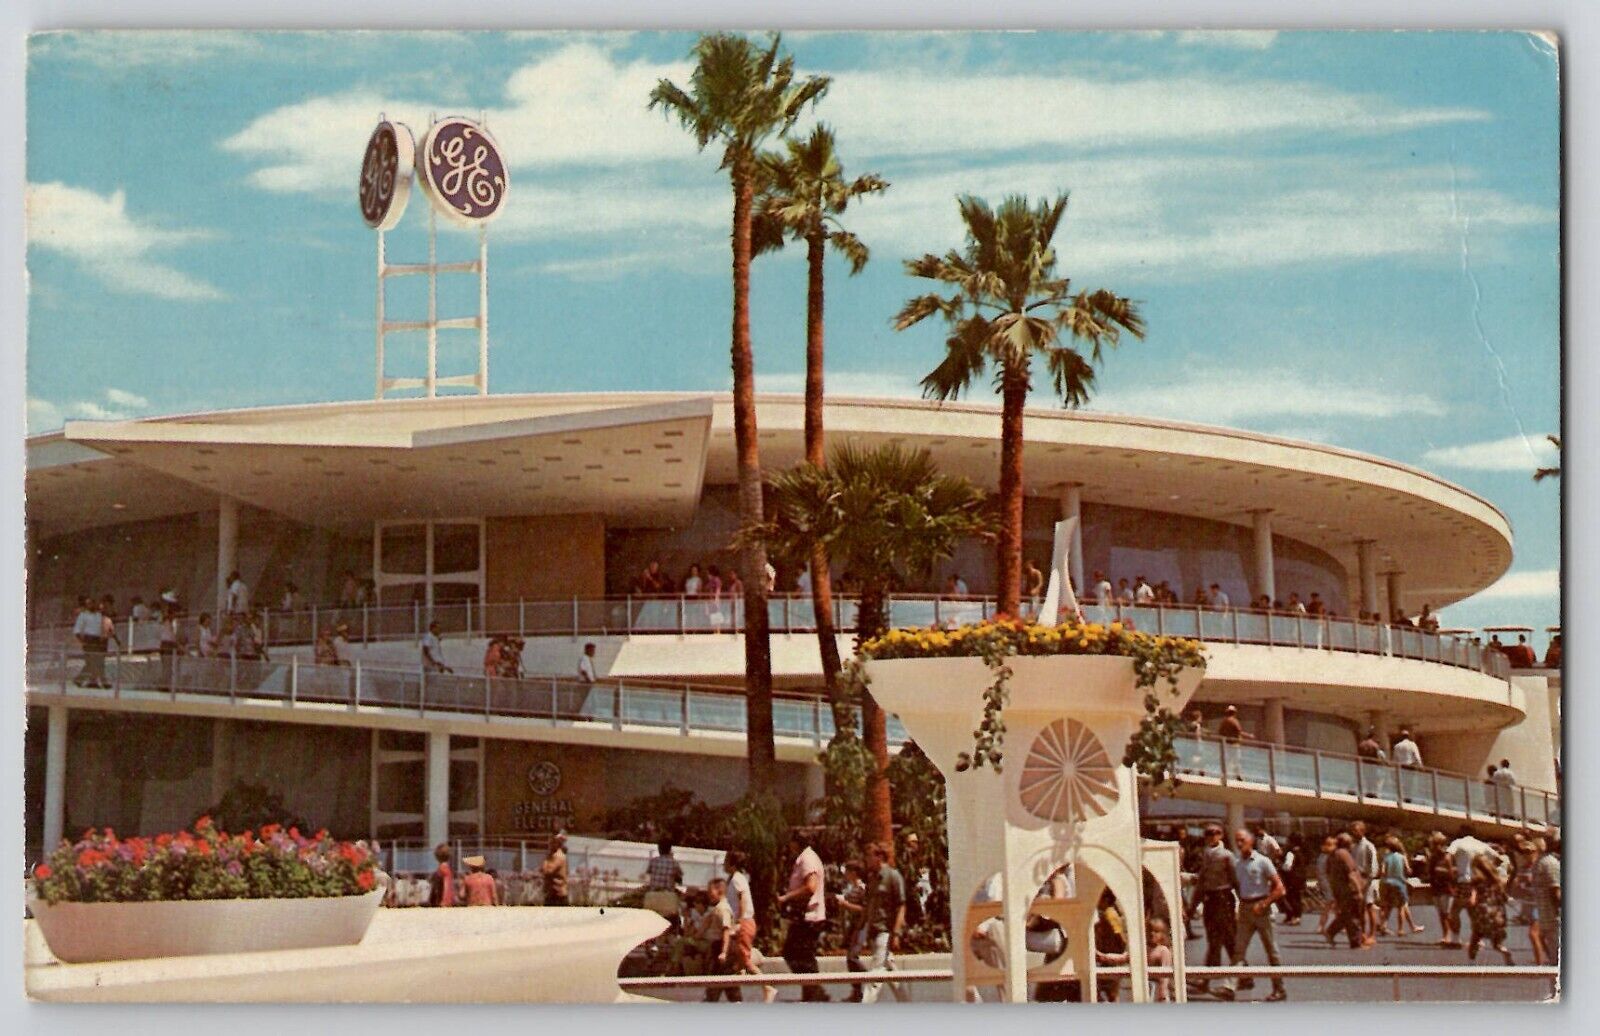 Disneyland Anaheim CA GE Carousel of Progress Tomorrowland Postcard 1970